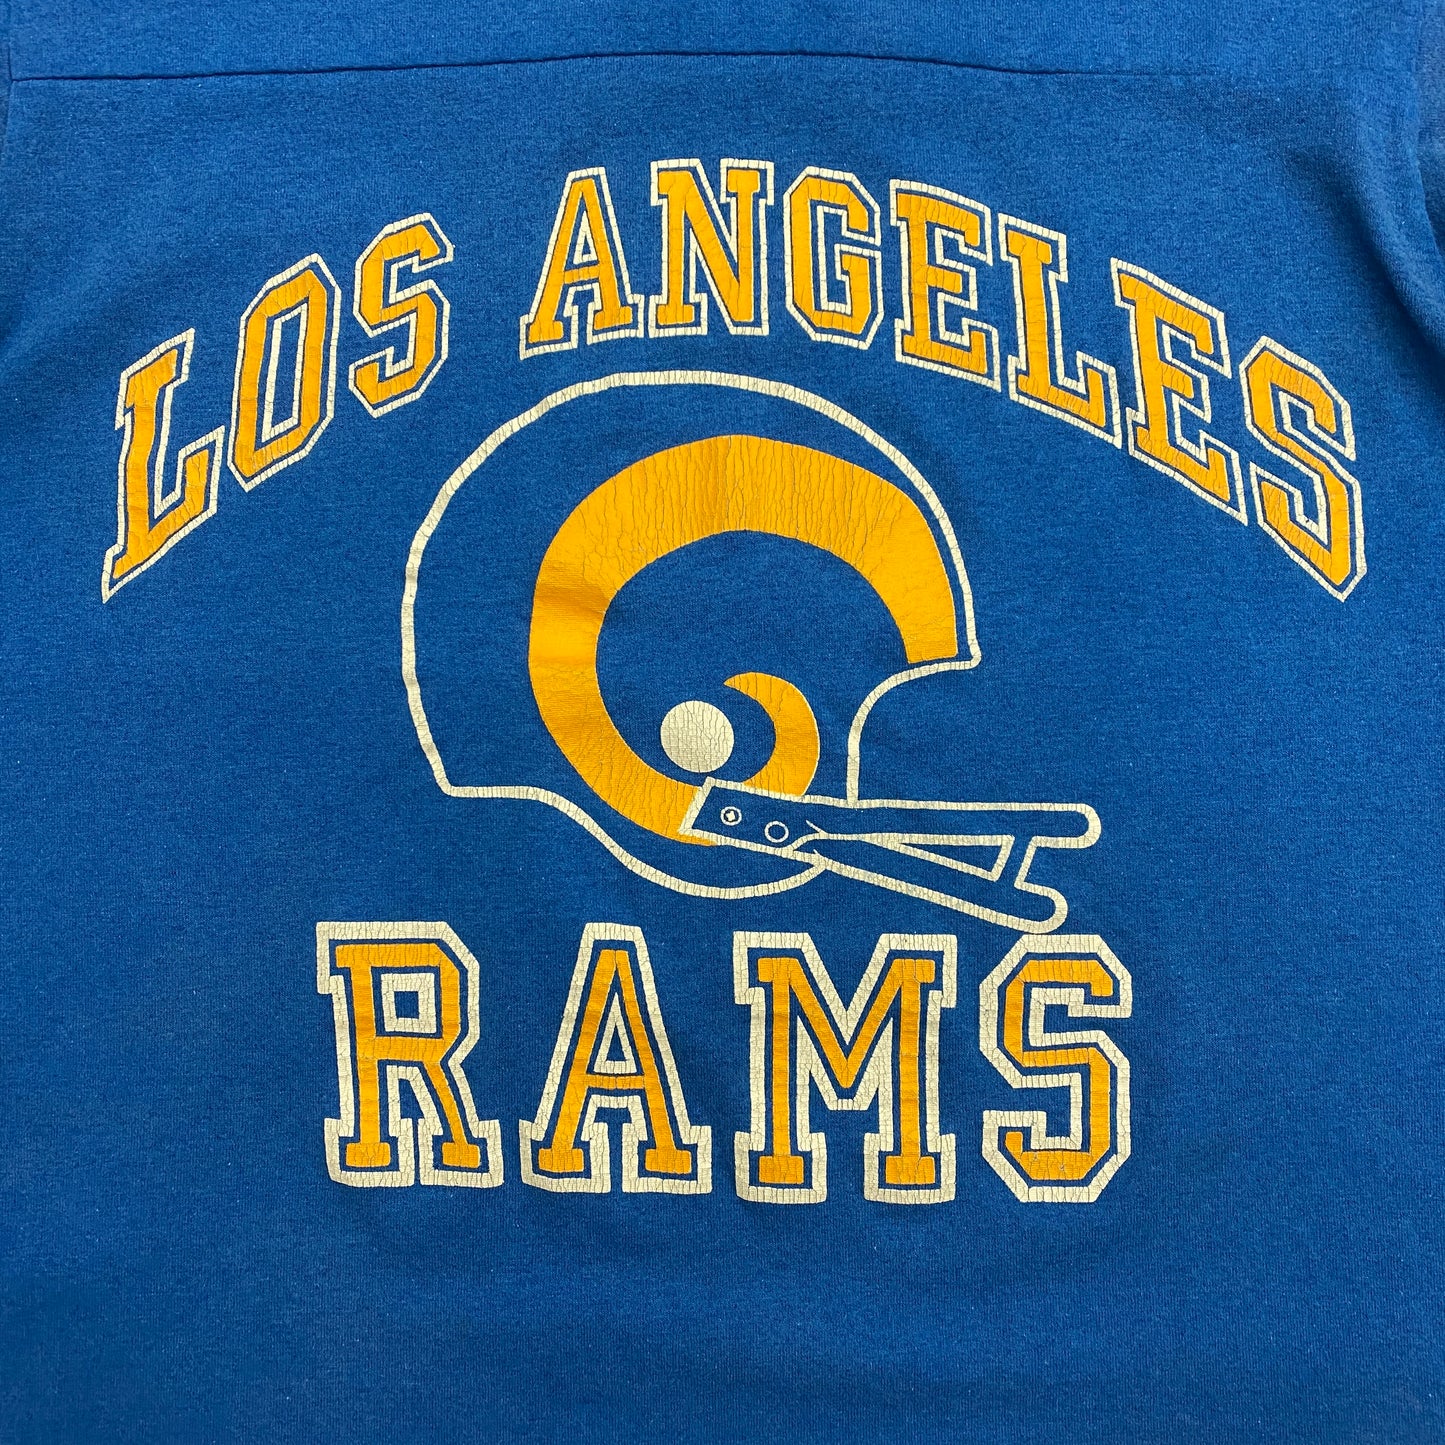 Vintage 1980s Logo 7 "Los Angeles Rams" Football Tee - Size M/L